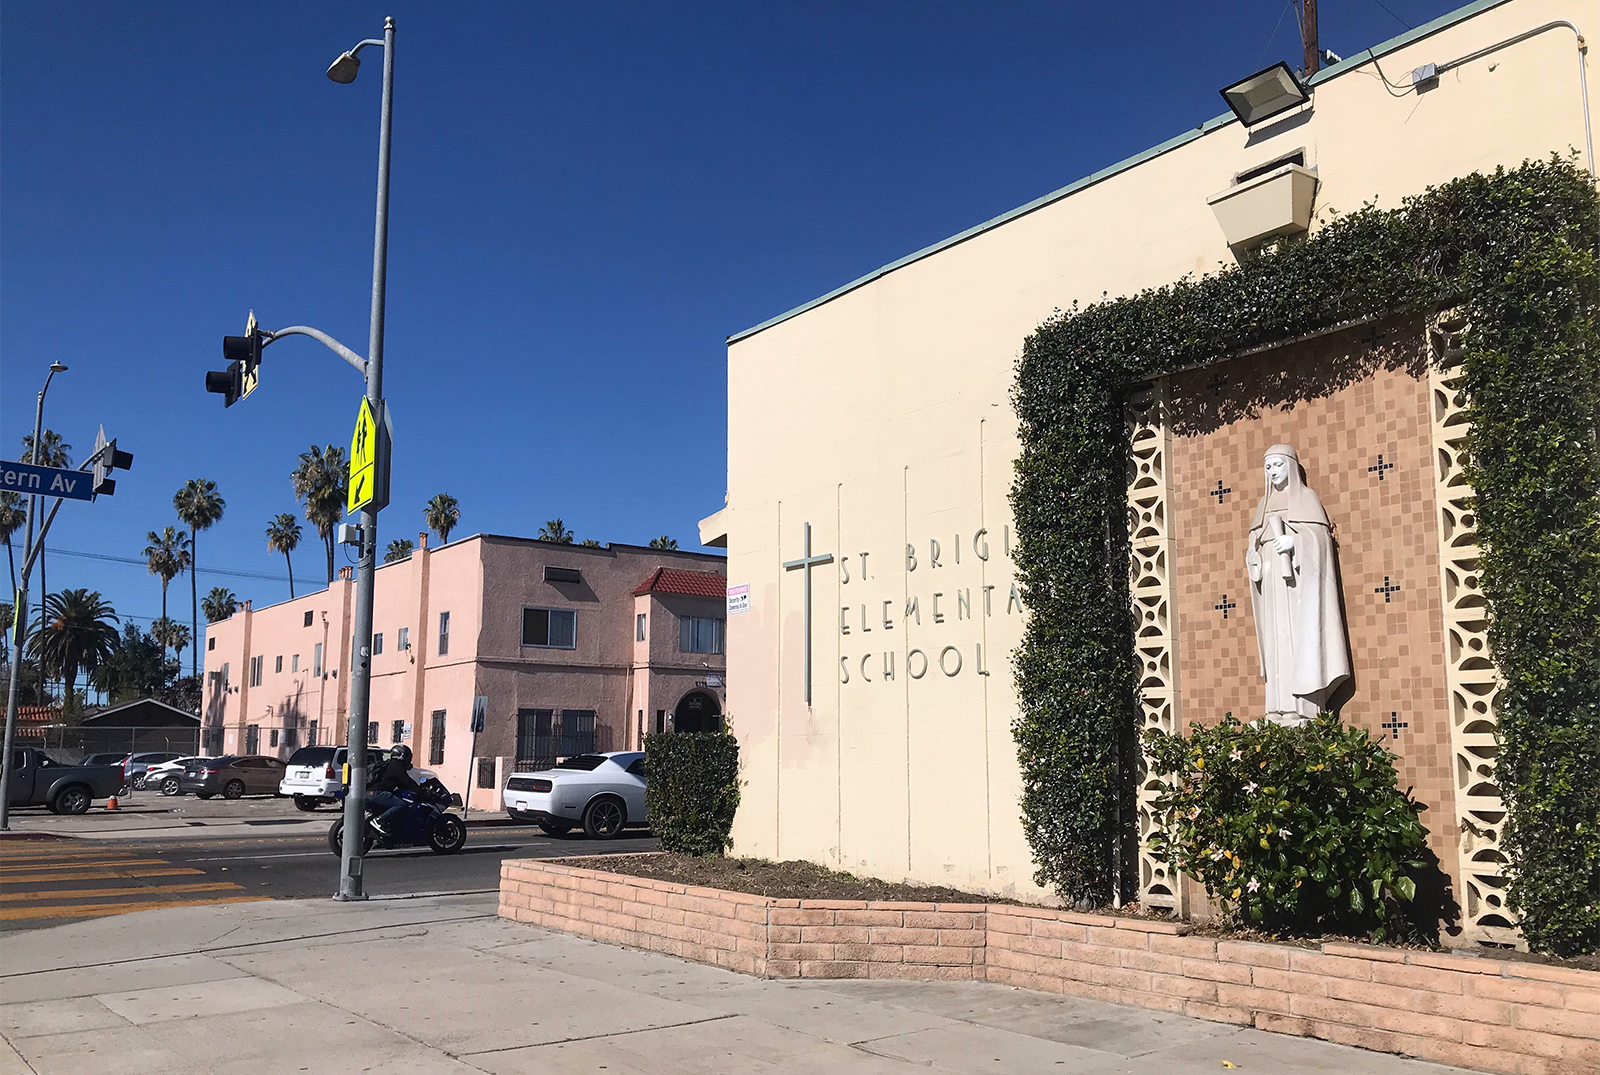 St. Brigid Elementary School in South Central Los Angeles. RNS photo by Alejandra Molina